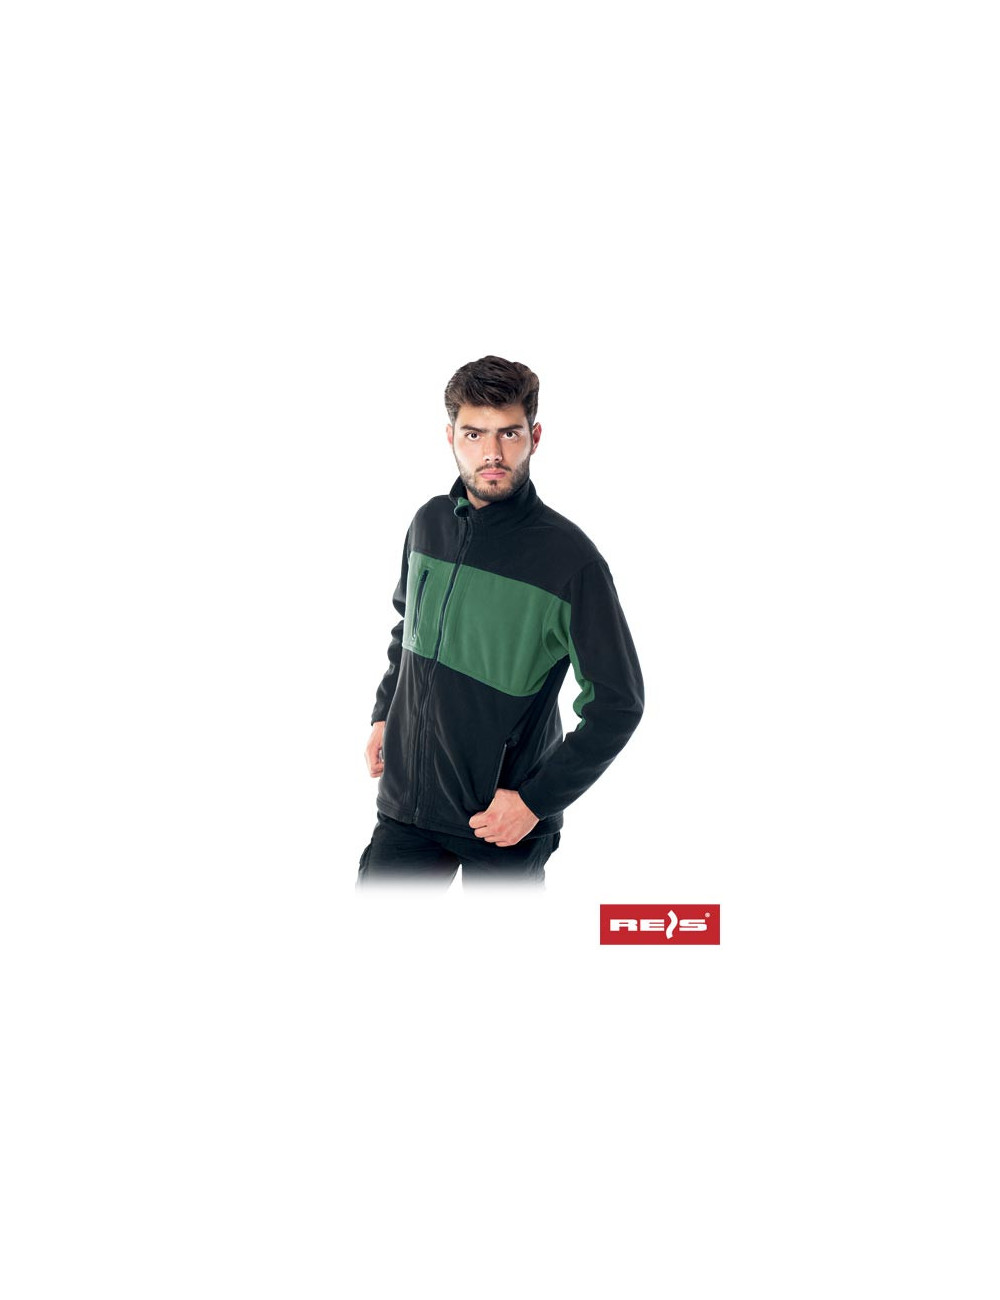 Schutz-Fleece-Sweatshirt Fleece-doble zb grün-schwarz Reis